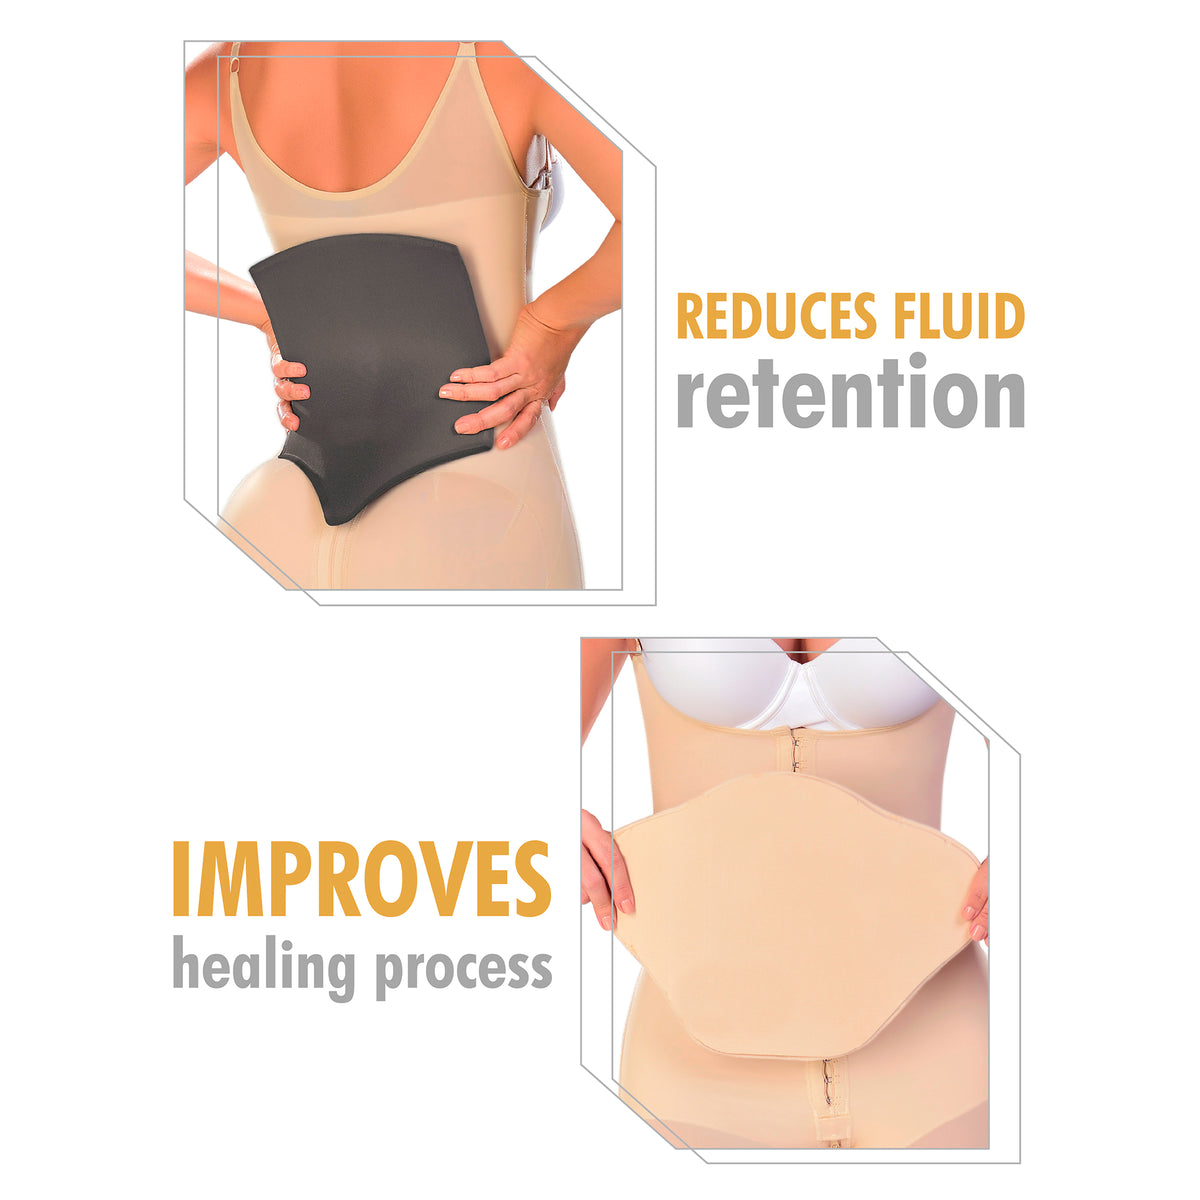 Lipo Foam Ab Board Post Surgery 360 Liposuction Abdominal Compression  Boards Flattening Belly Lumbar Lipo Recovery